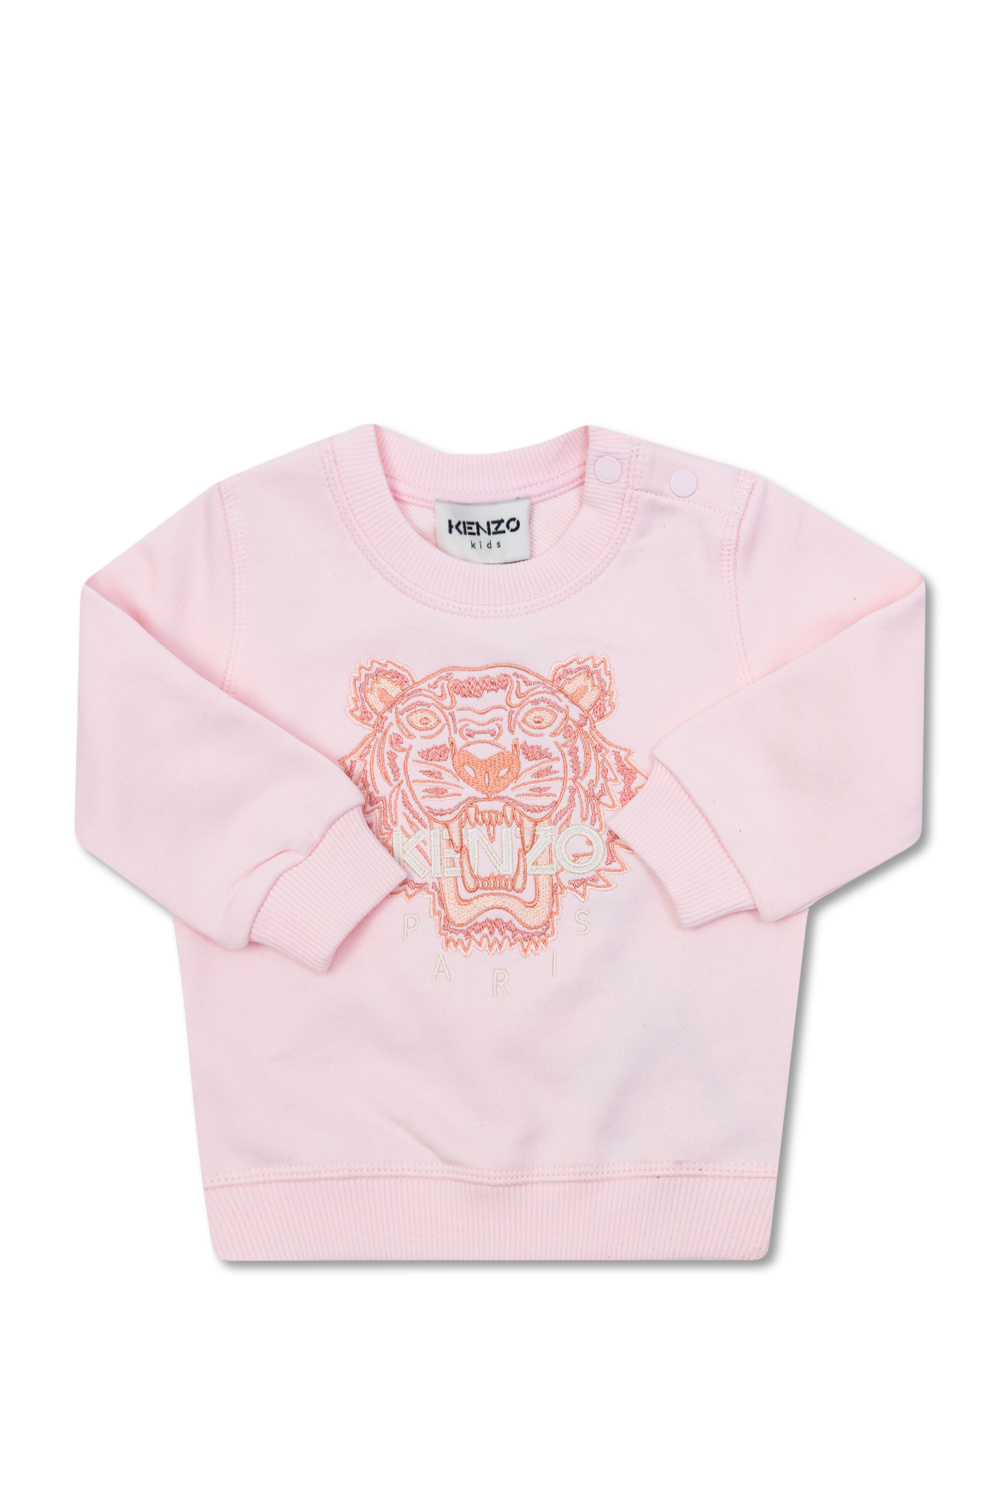 Kenzo Kids black sweatshirt with tiger motif